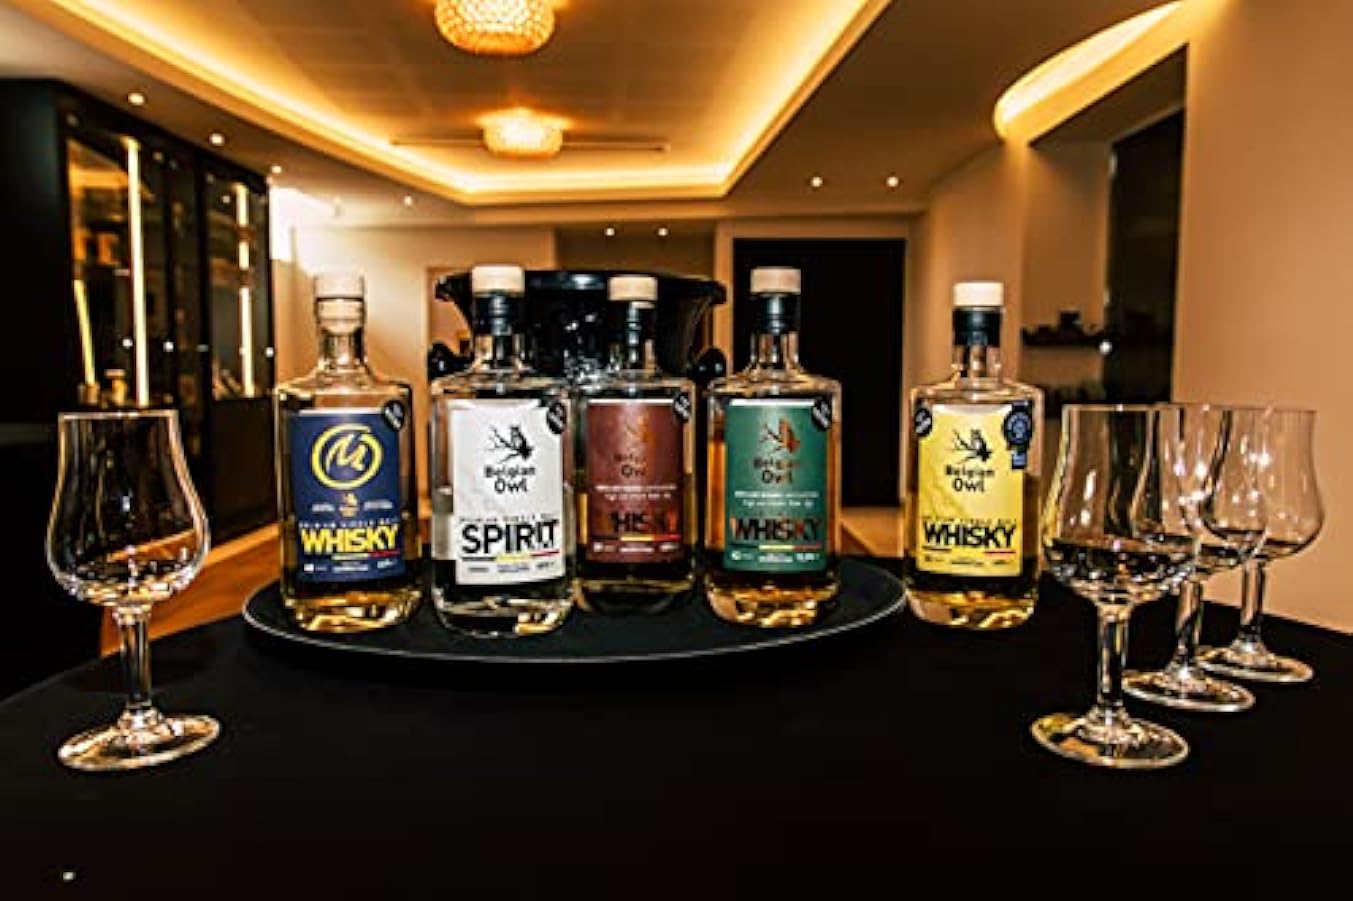 The Belgian Owl Single Malt Whisky 46% - 500ml in Giftbox 902253813